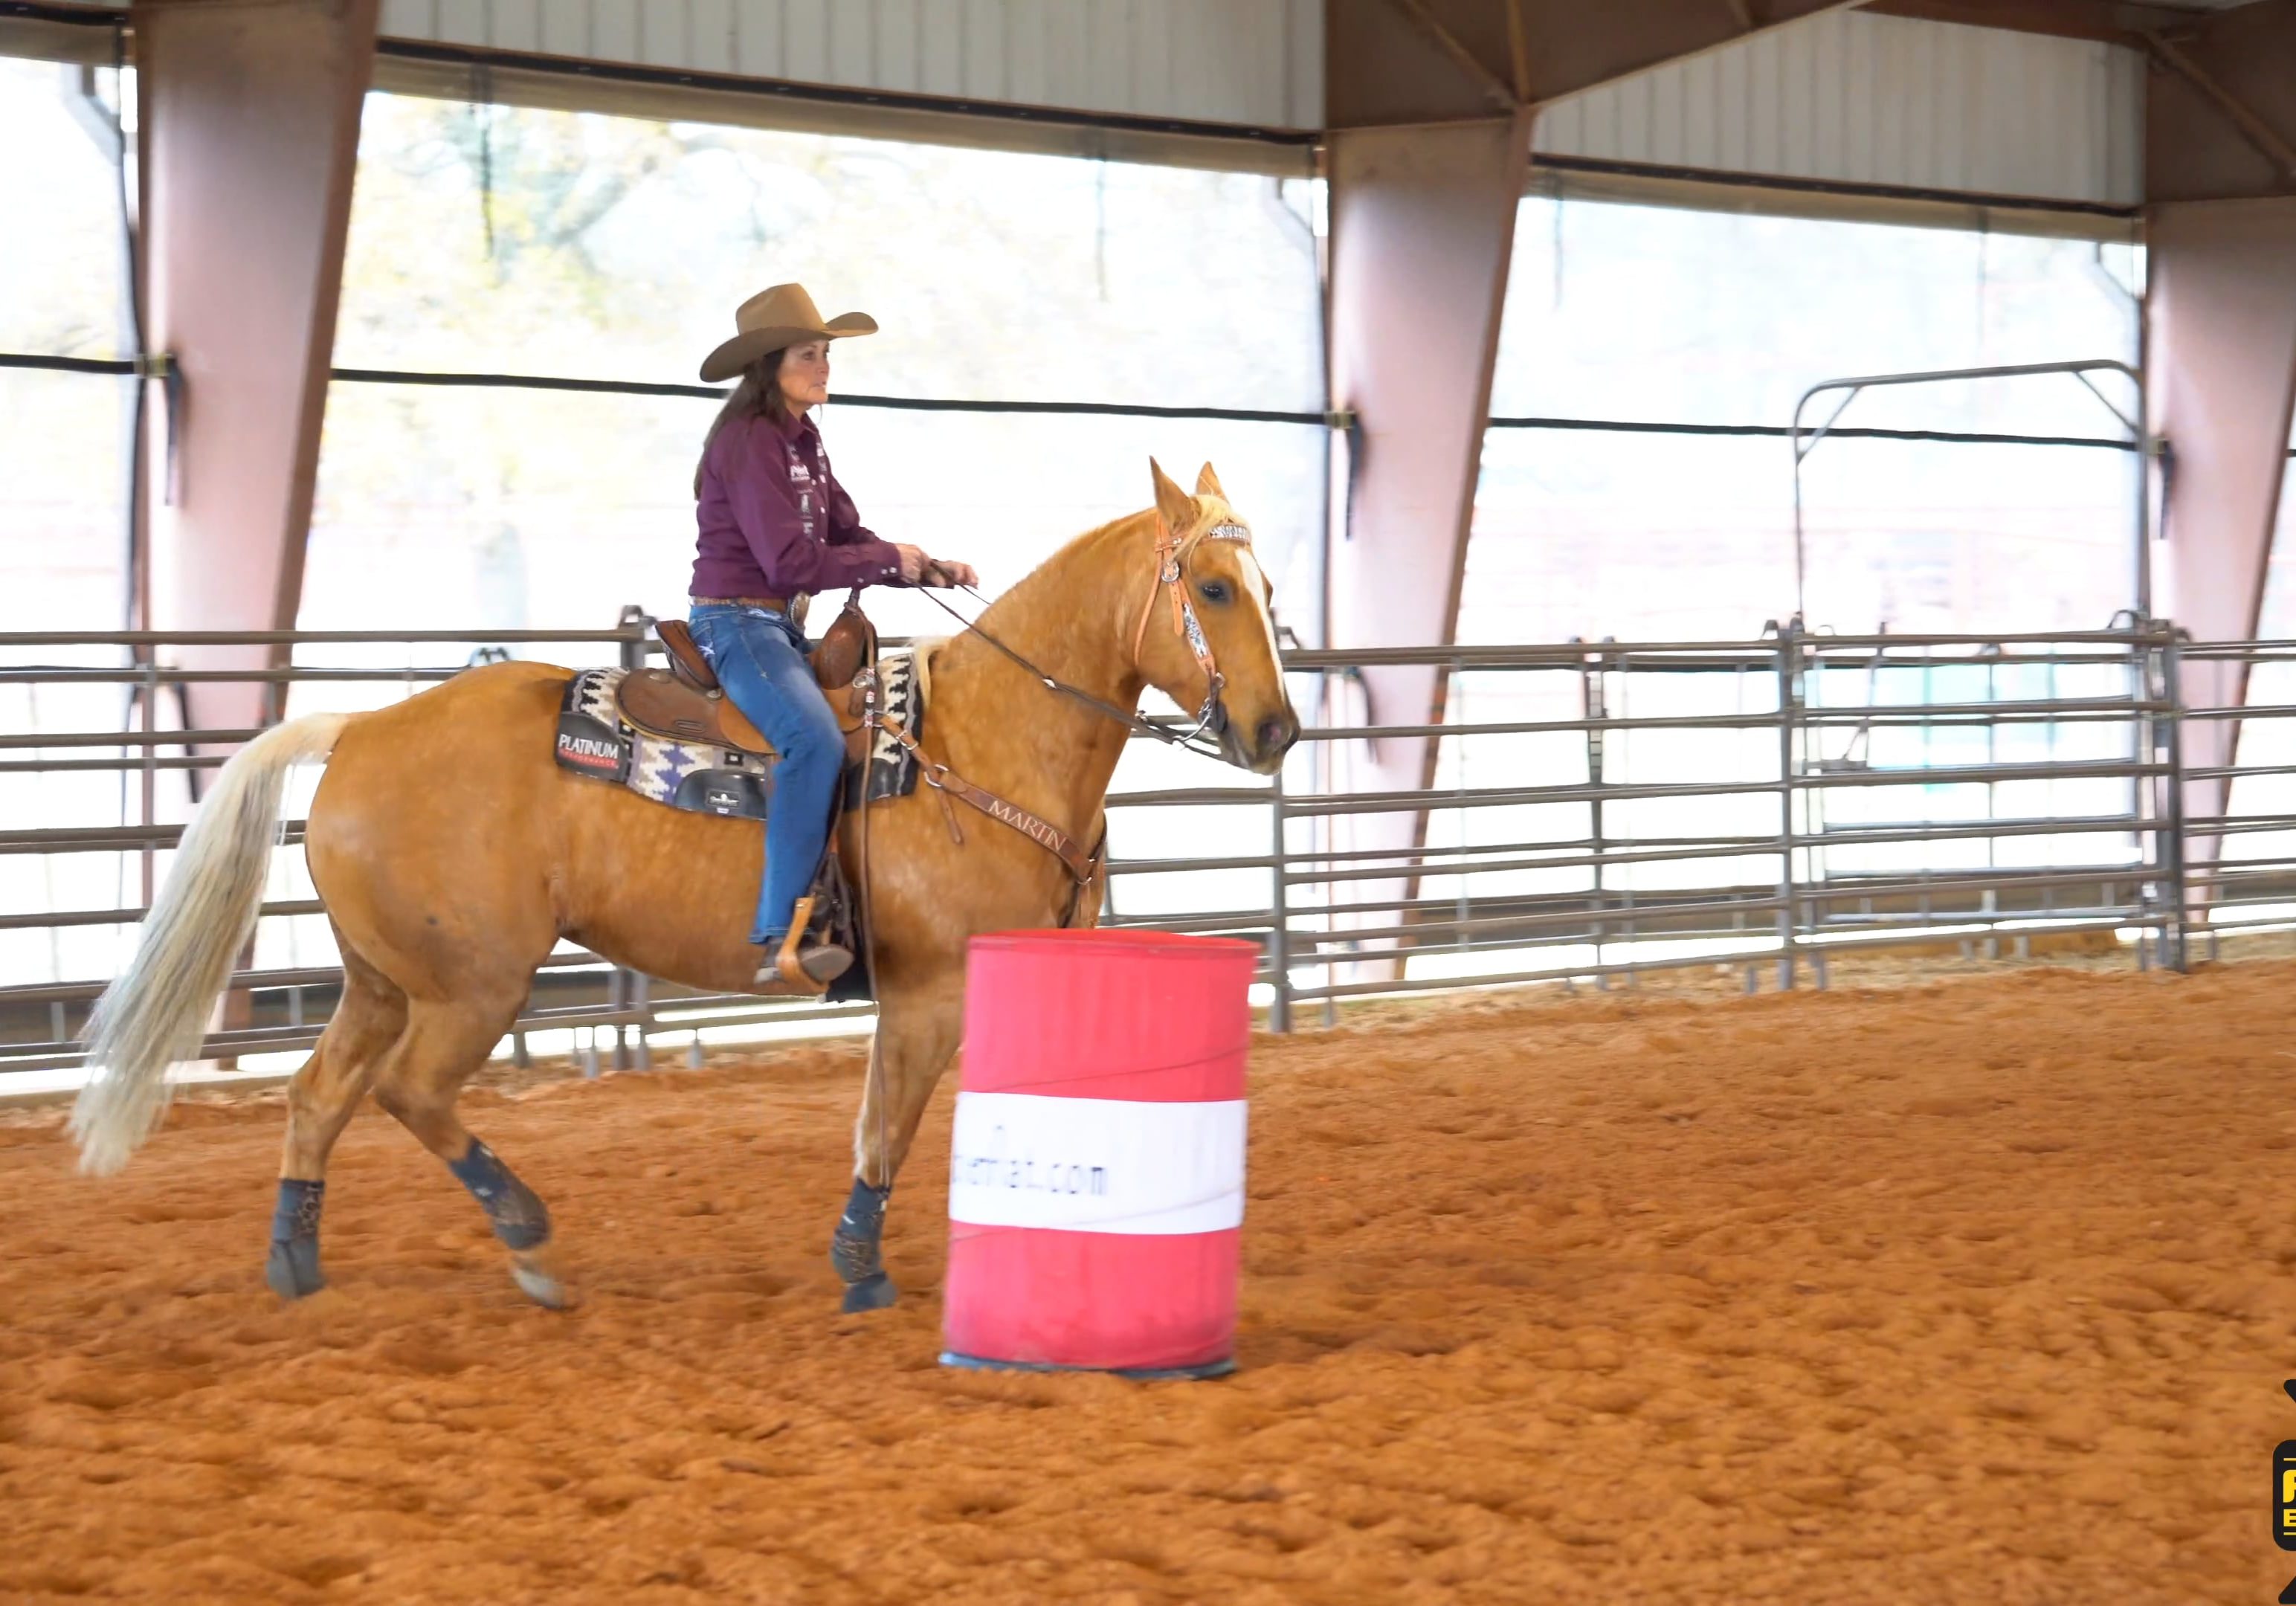 Lisa Lockhart wearing barrel racing attire and riding a horse around a barrel.